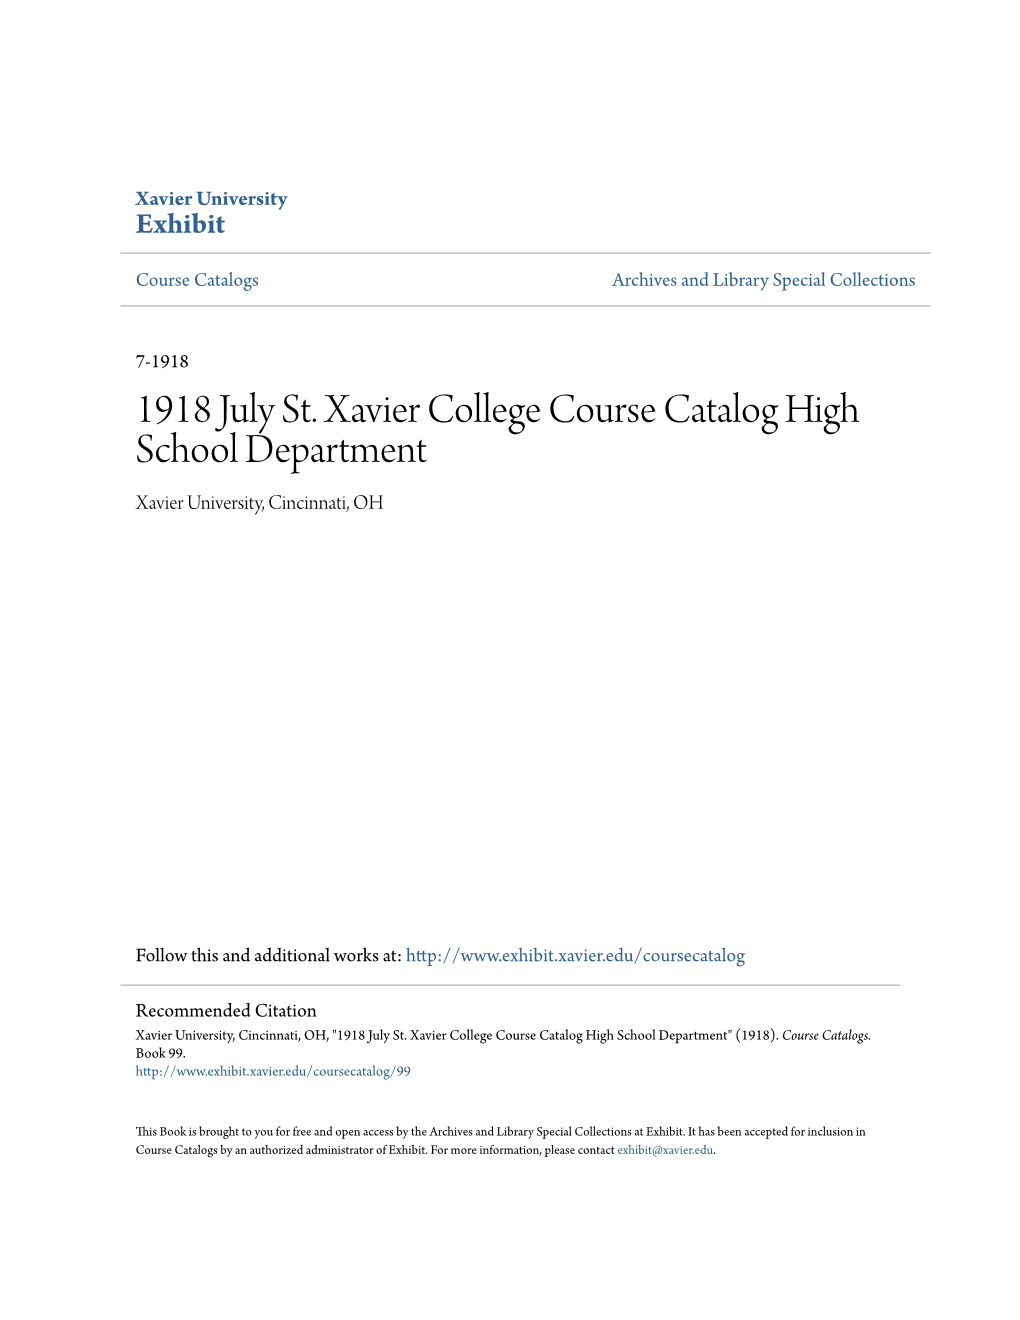 1918 July St. Xavier College Course Catalog High School Department Xavier University, Cincinnati, OH